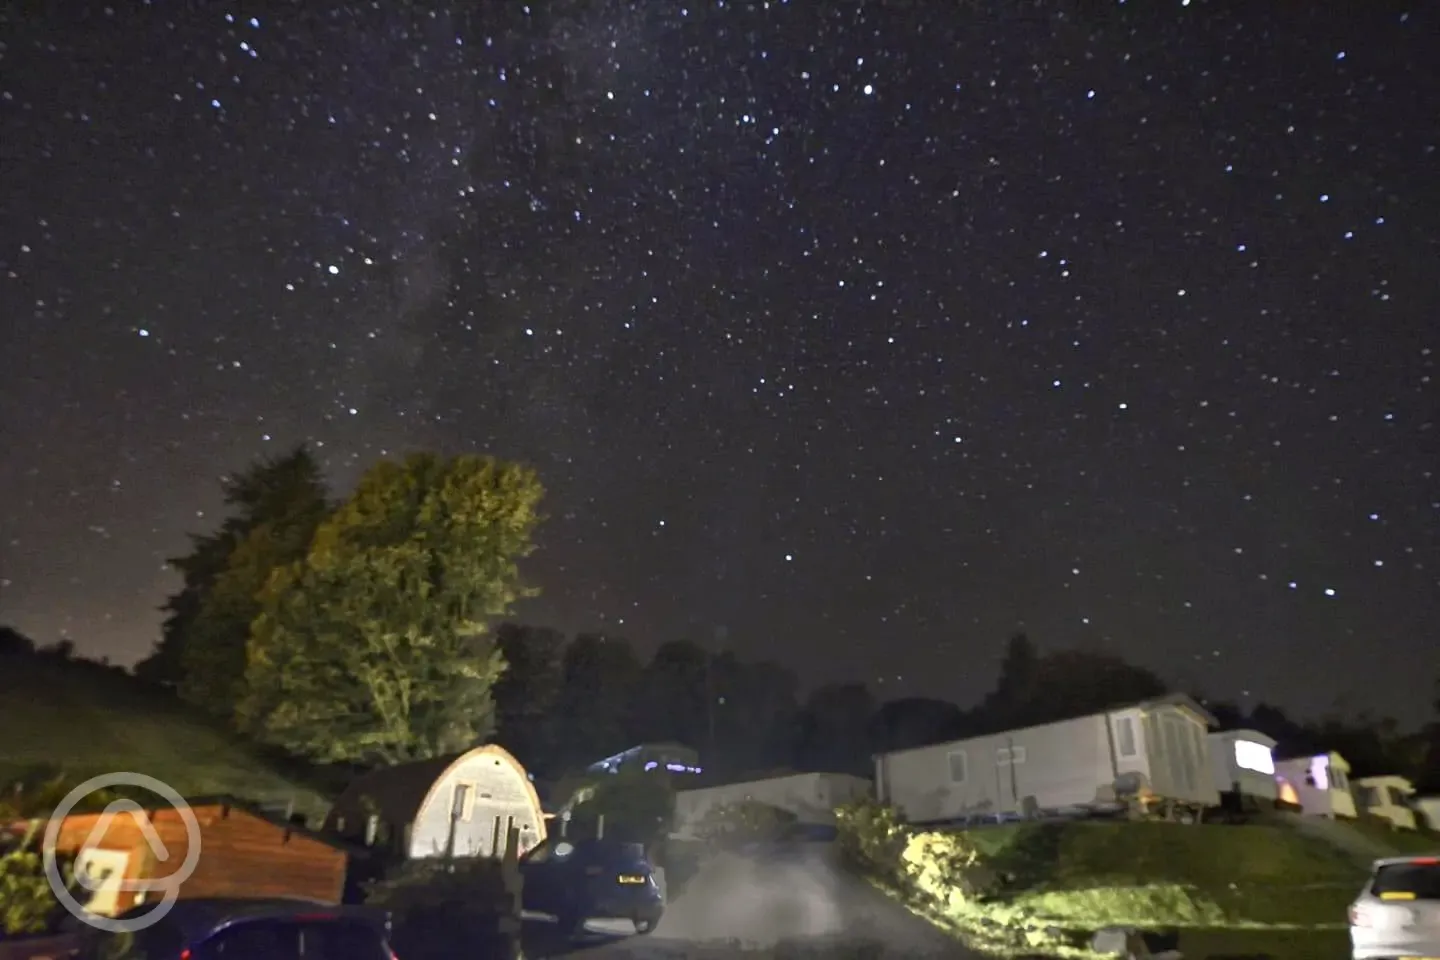 Carrick lodge pod under the stars